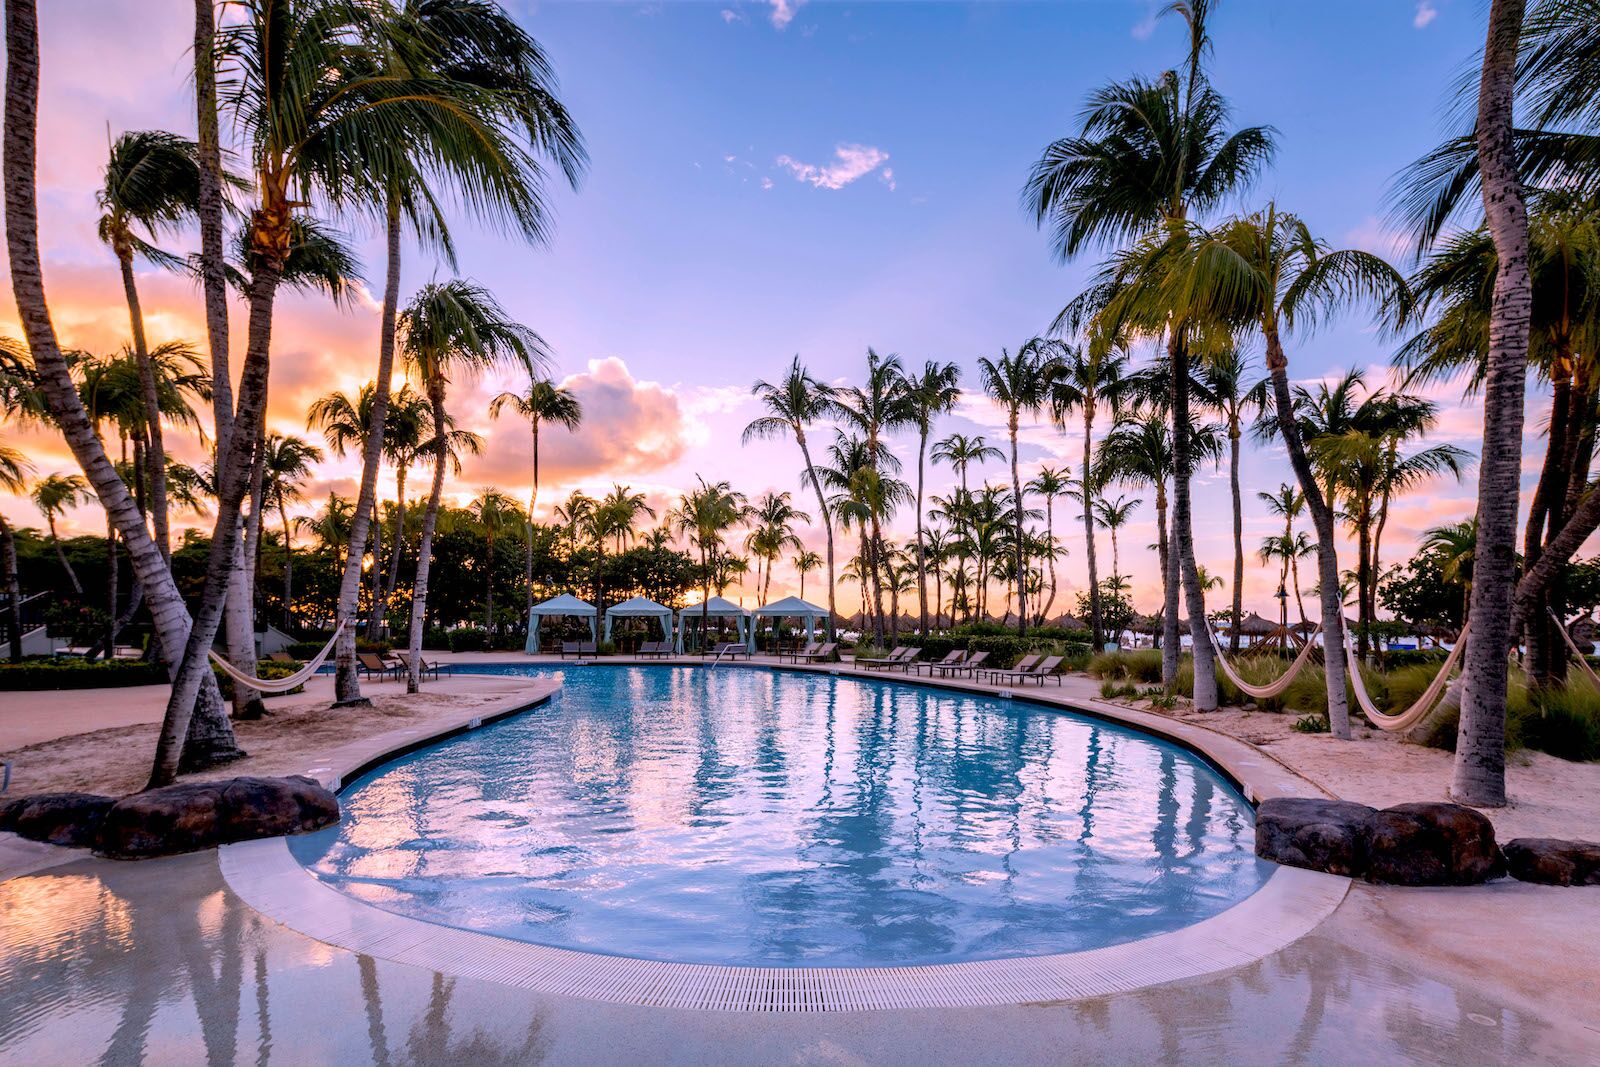 Hilton Aruba Caribbean Resort & Casino- pool at sunset